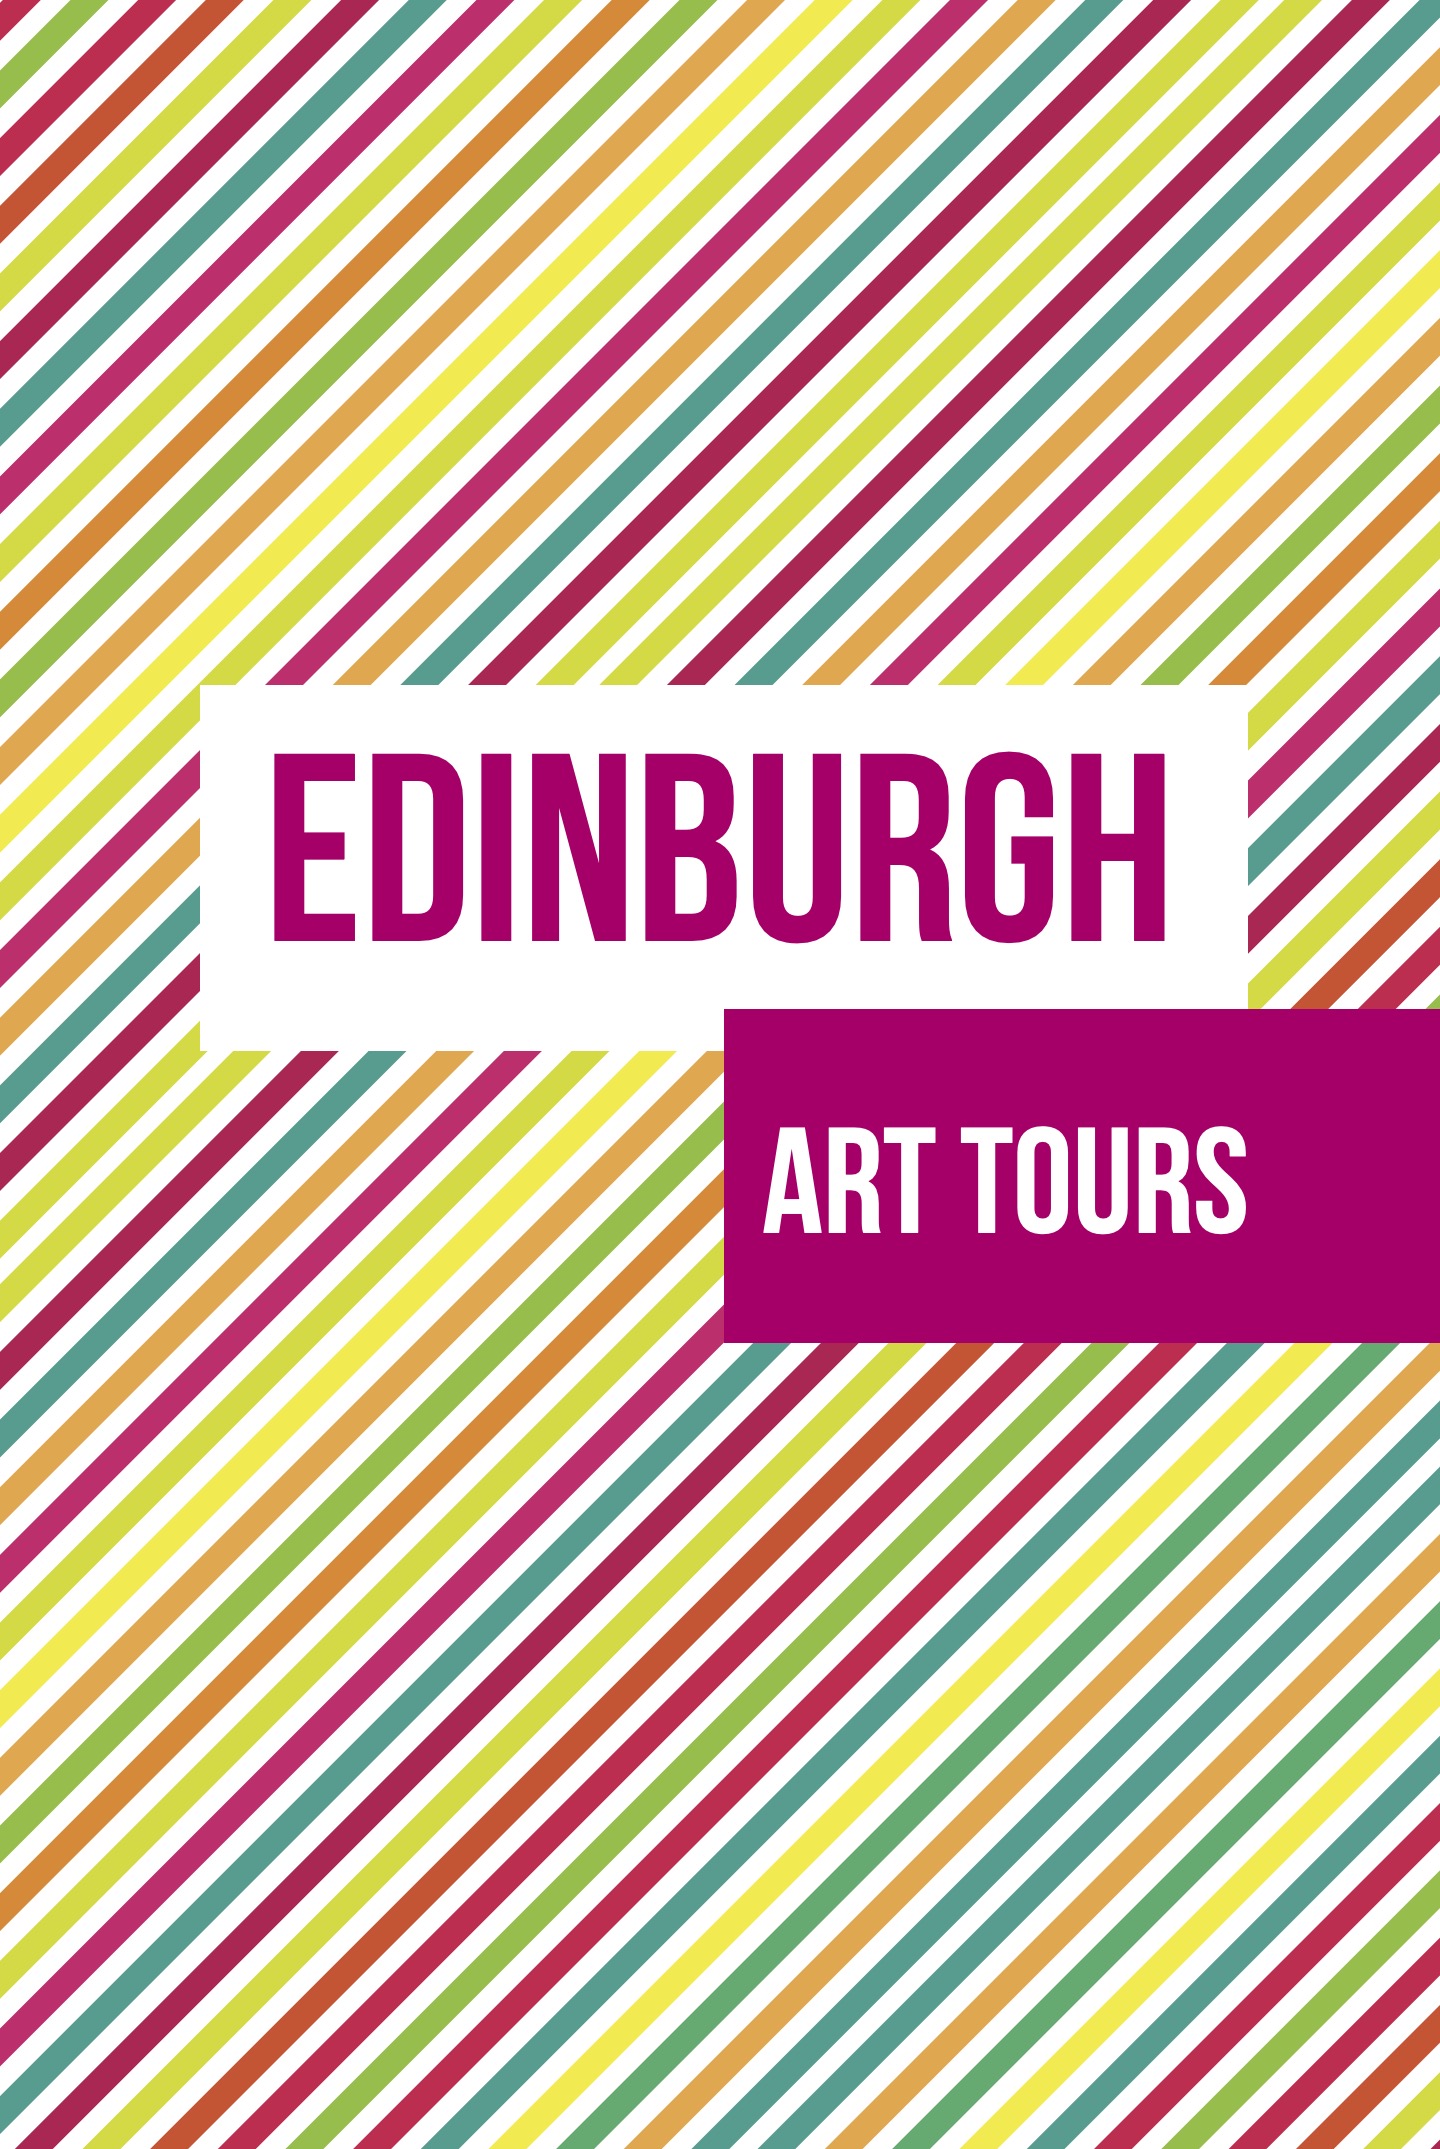 Paul organises our Art Discovery Tours across Edinburgh galleries